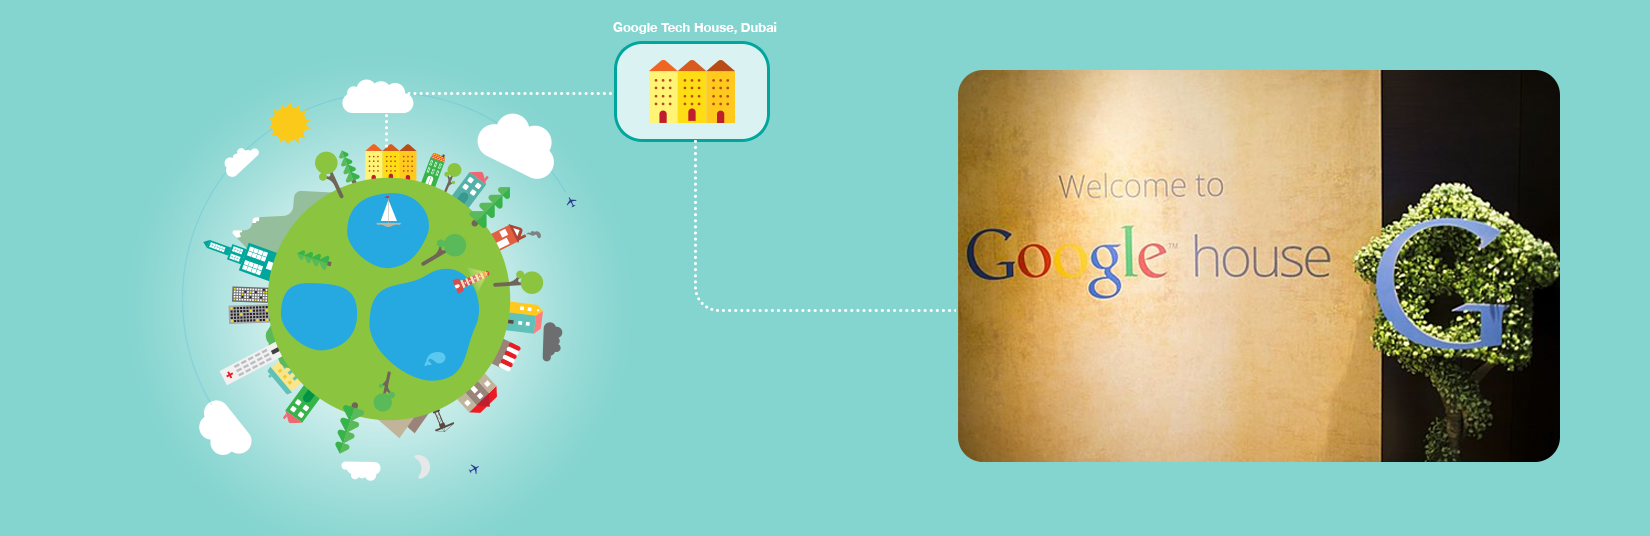 Google Tech House, Google Dubai, Google Technology